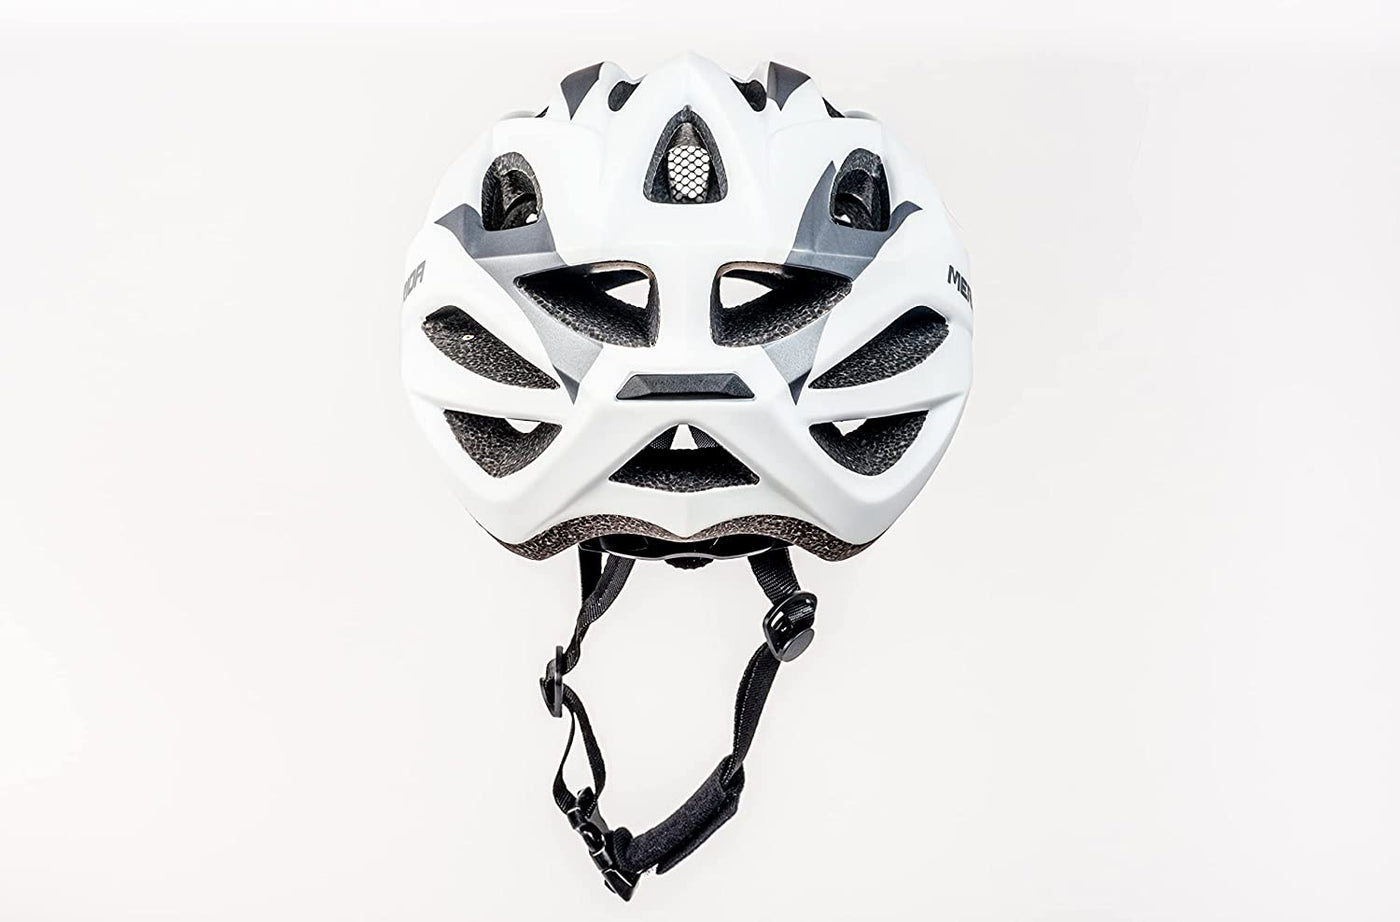 Merida Charger KJ201 Cycle Helmet | Matt White & Grey - Cyclop.in